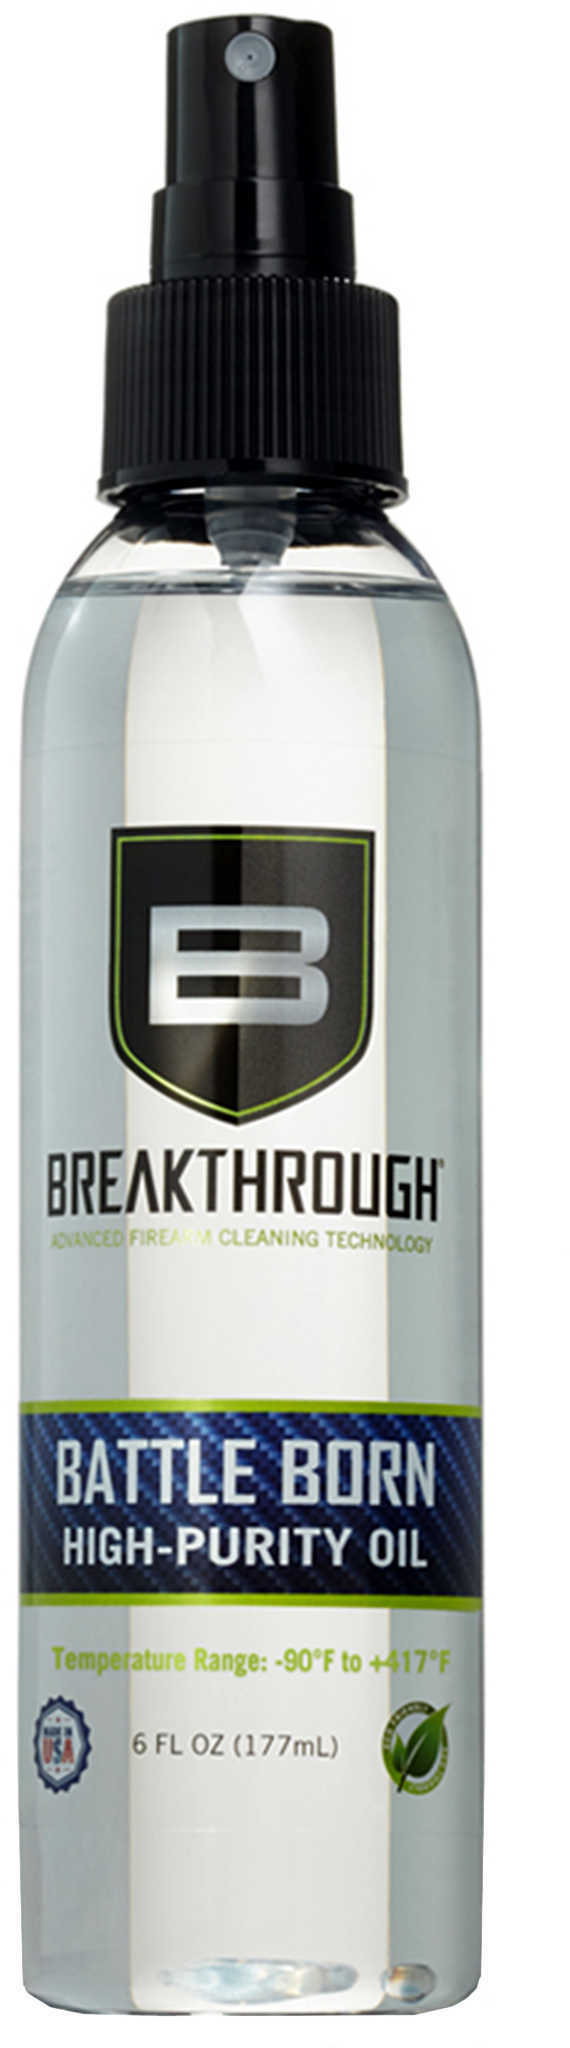 Breakthrough Battle Born High Purity Oil 6Oz Bottle Odorless